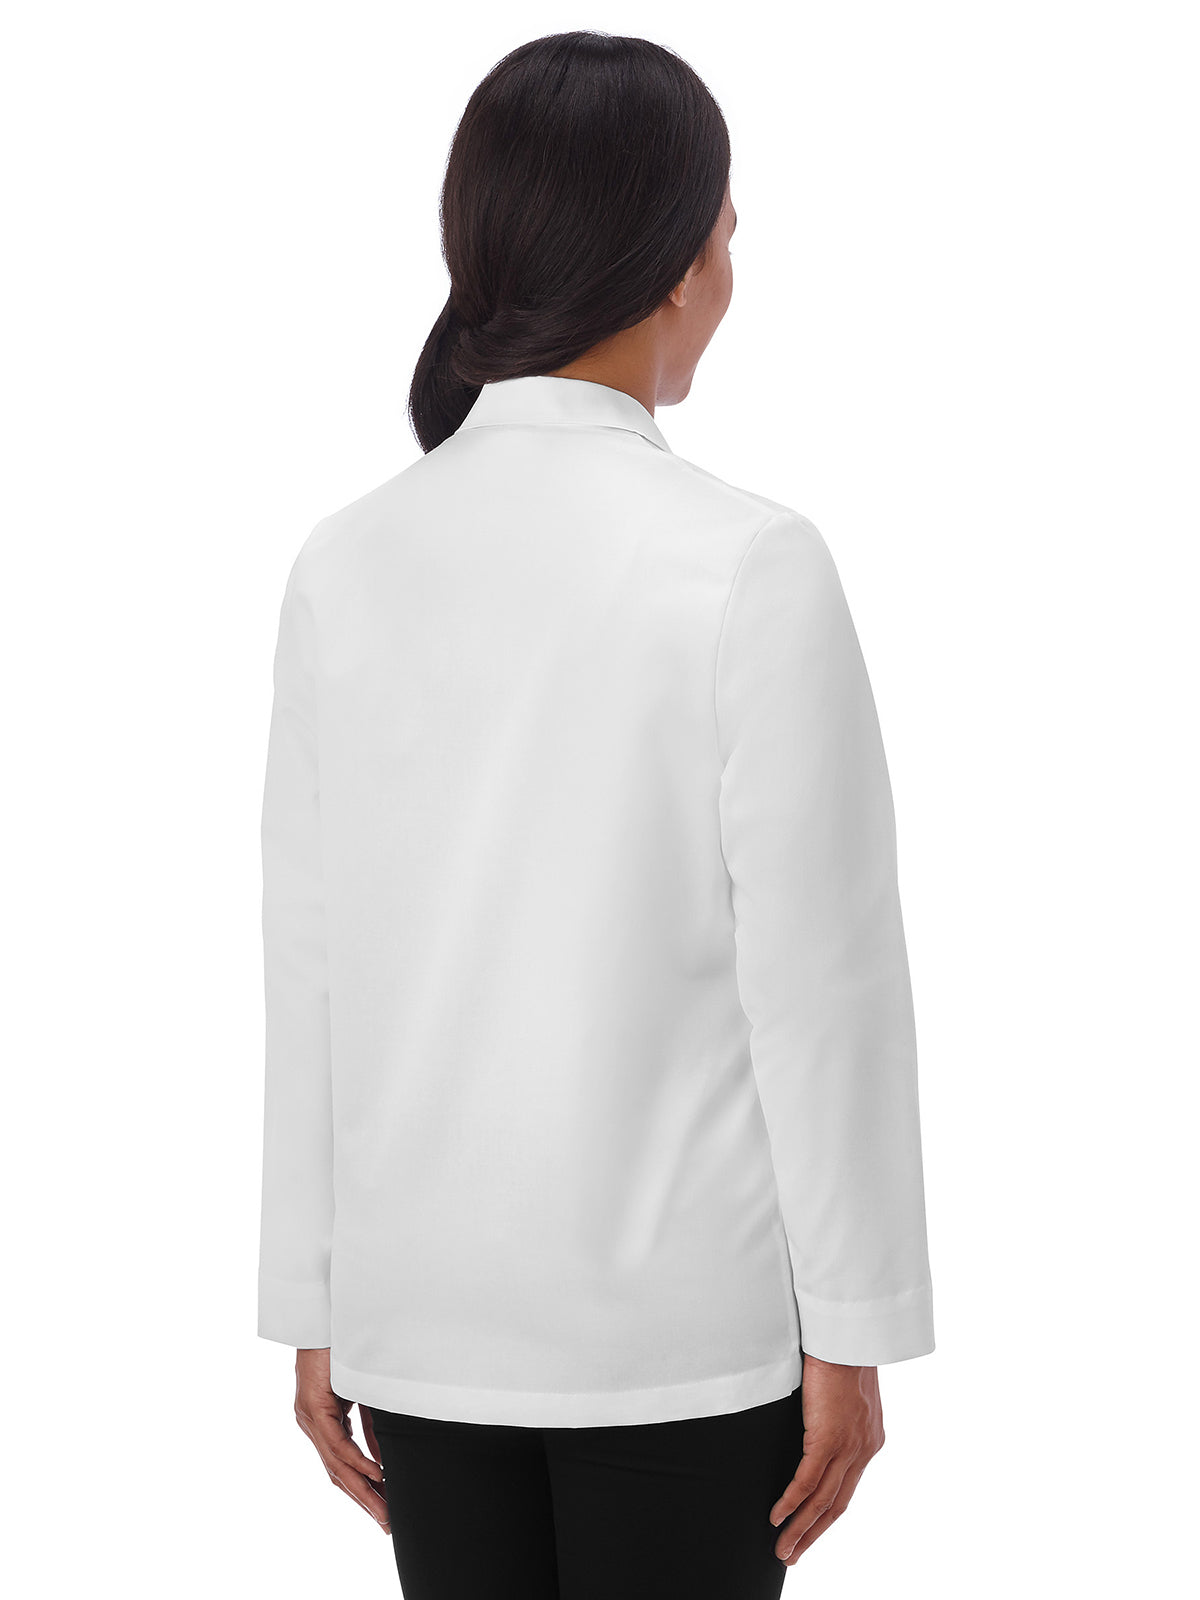 Women's Pocket Consultation Lab Coat - 738 - White